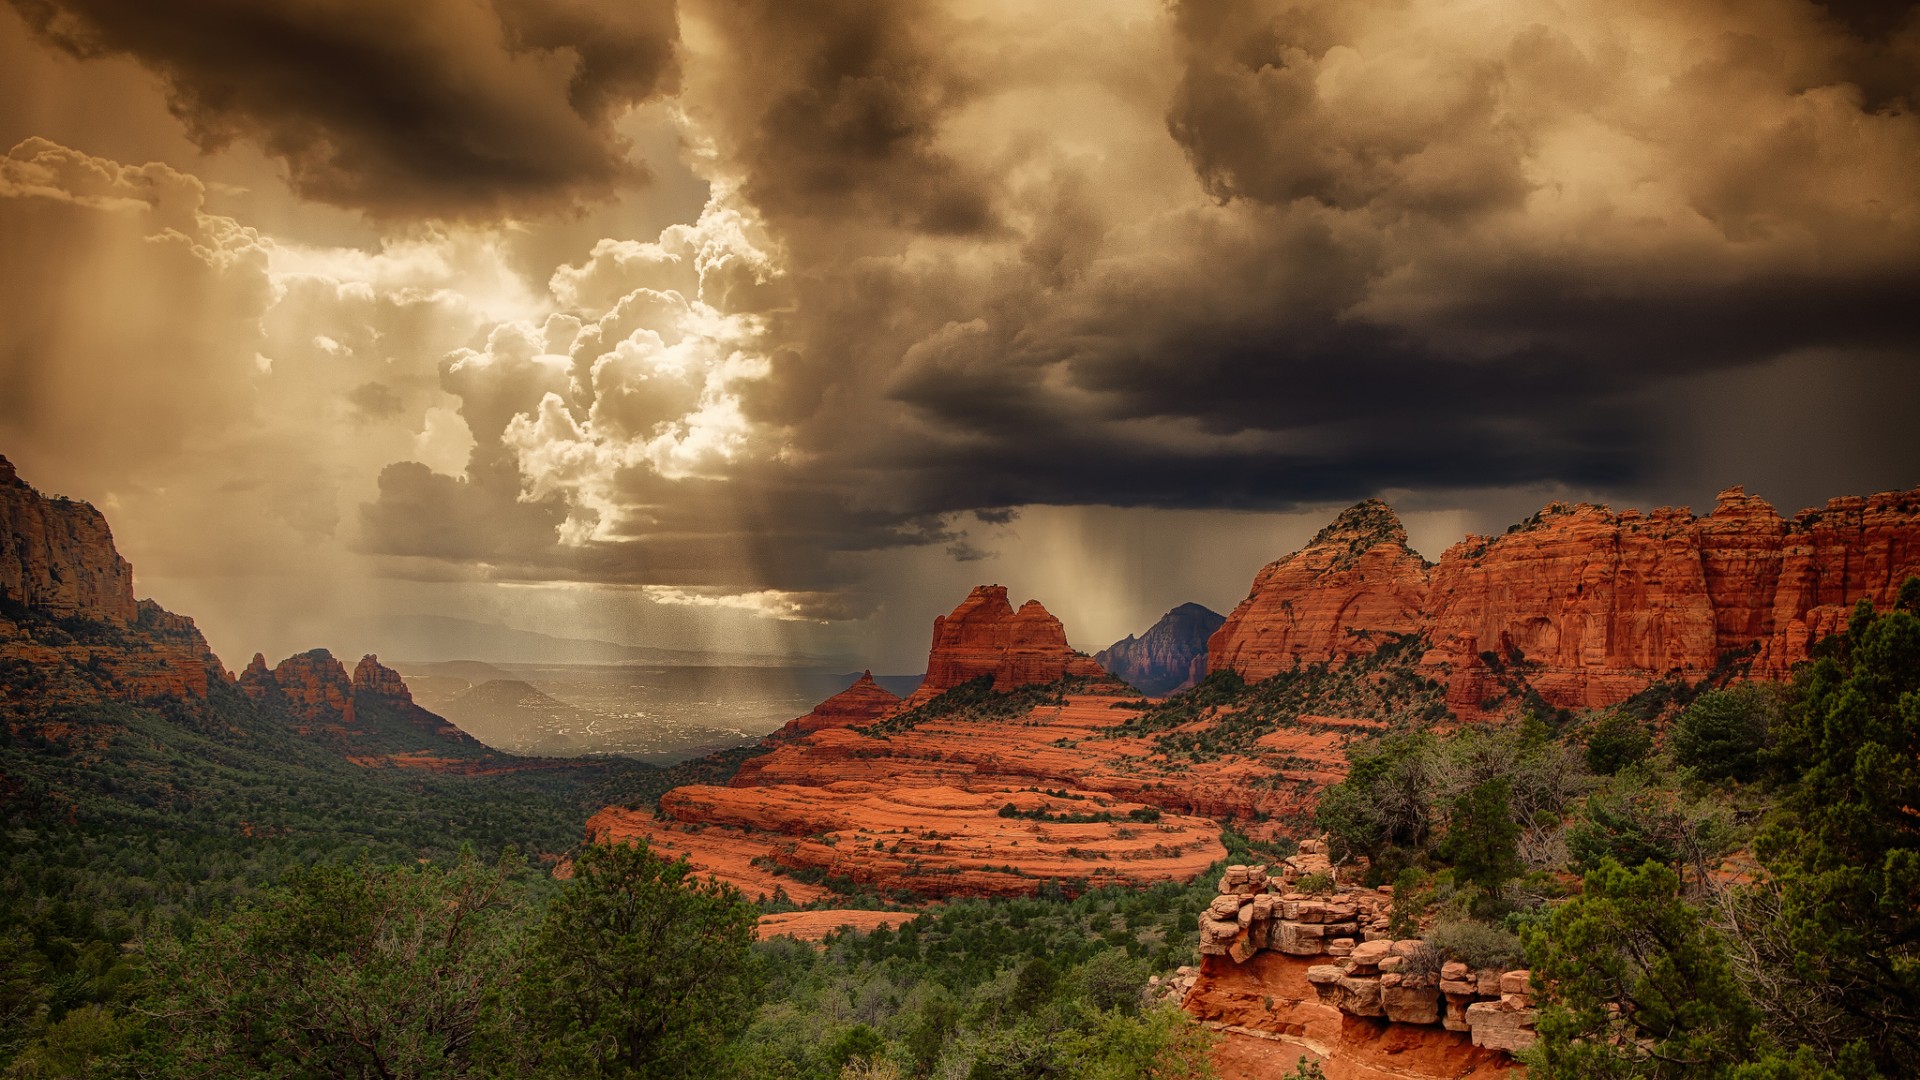 Desktop wallpapers Storm clouds over the red rocks of Sedona Arizona 1920x1080